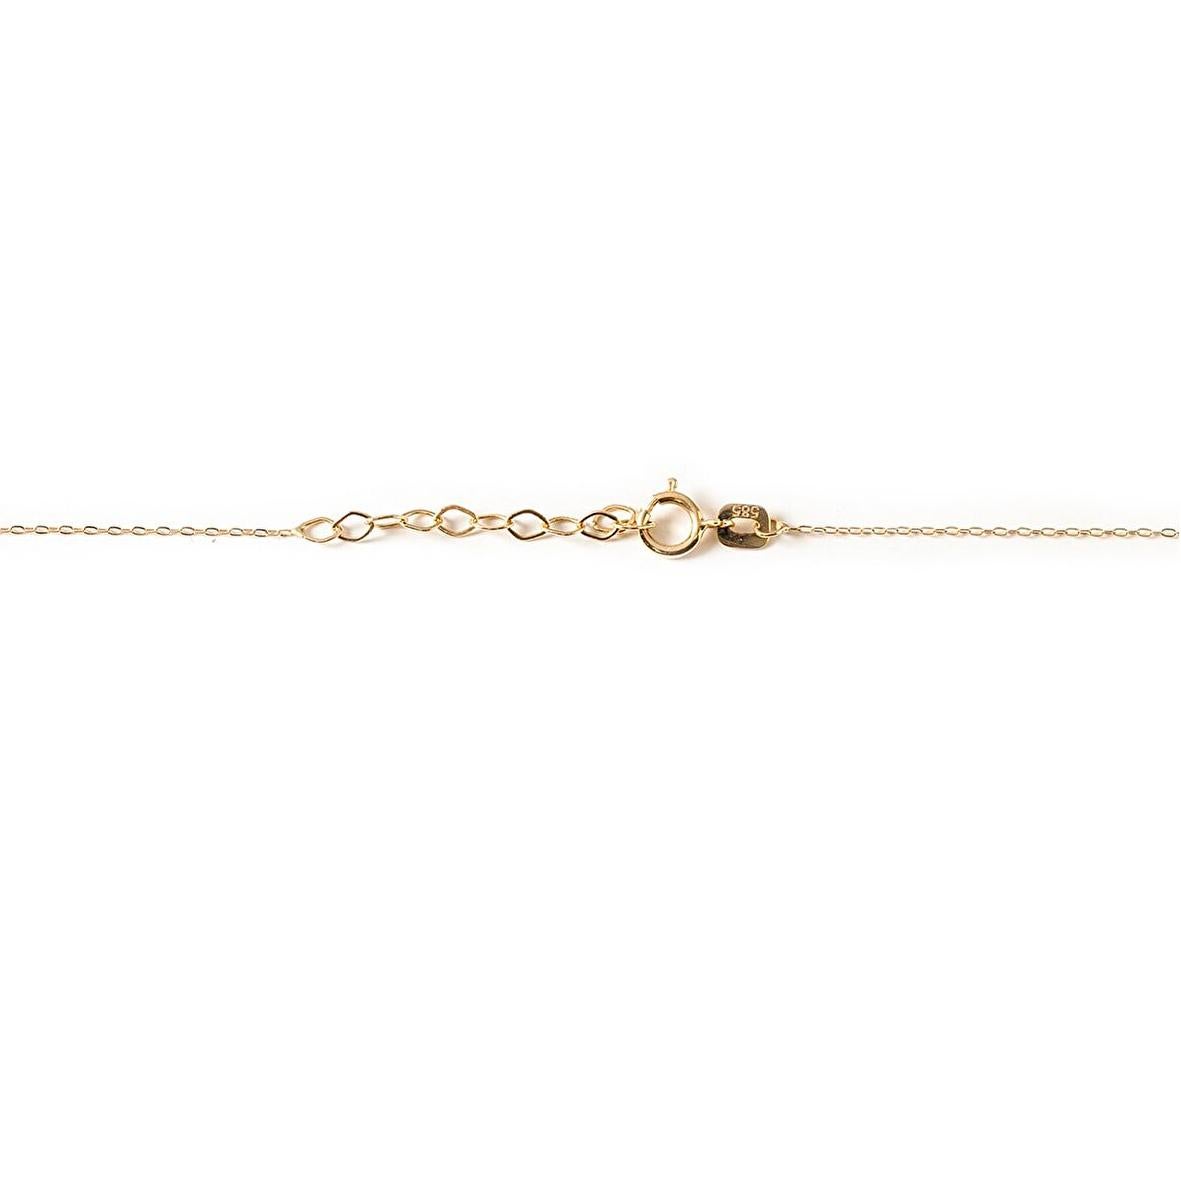 Modern 14 Karat Gold Cross Shaped Charm Necklace, Cross Pendant Necklace